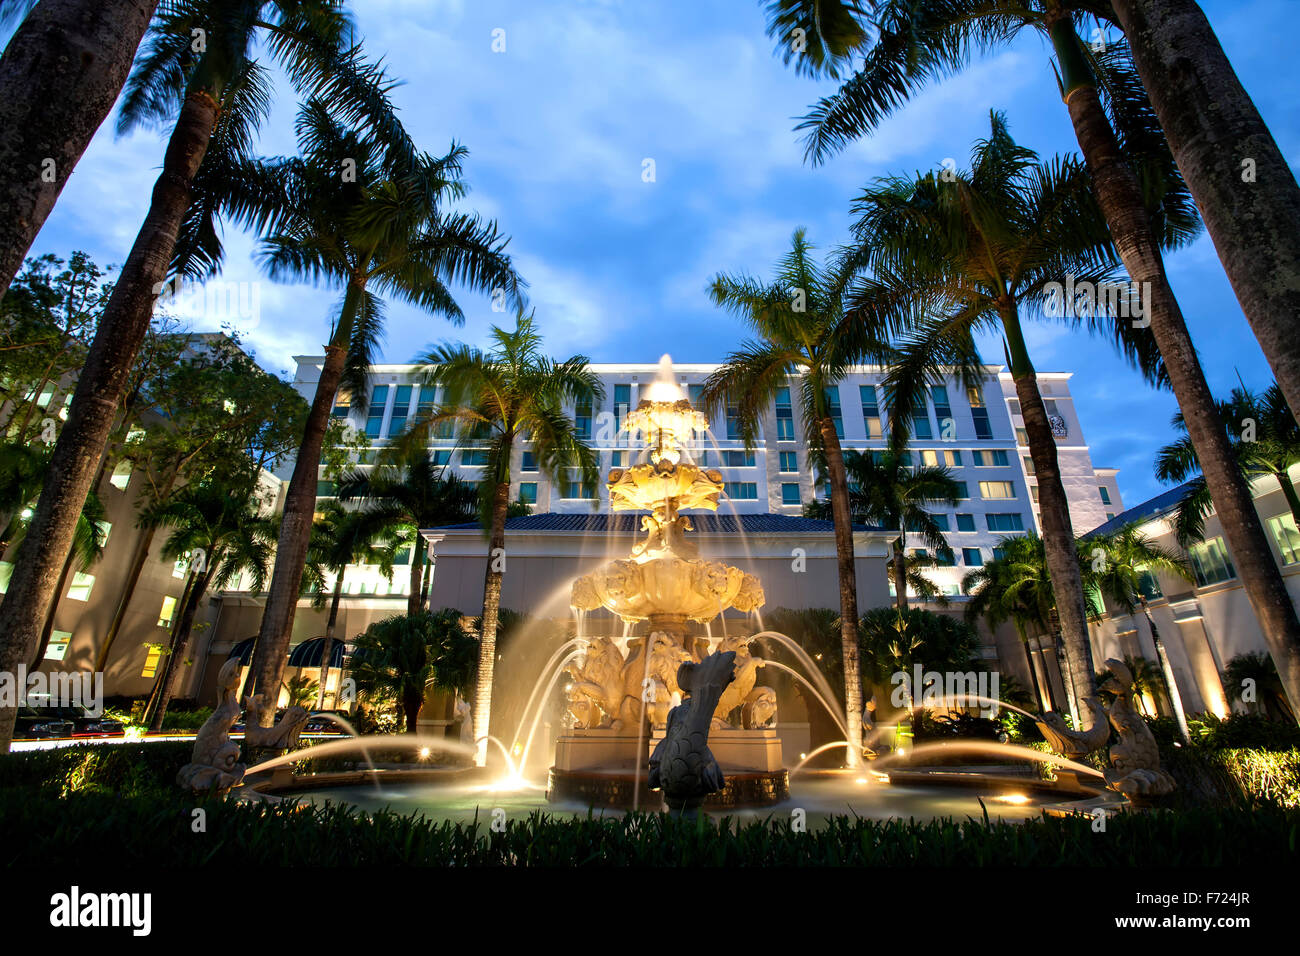 Fountain and main entrance, Ritz Carlton Hotel, Isla Verde, Puerto Rico Stock Photo